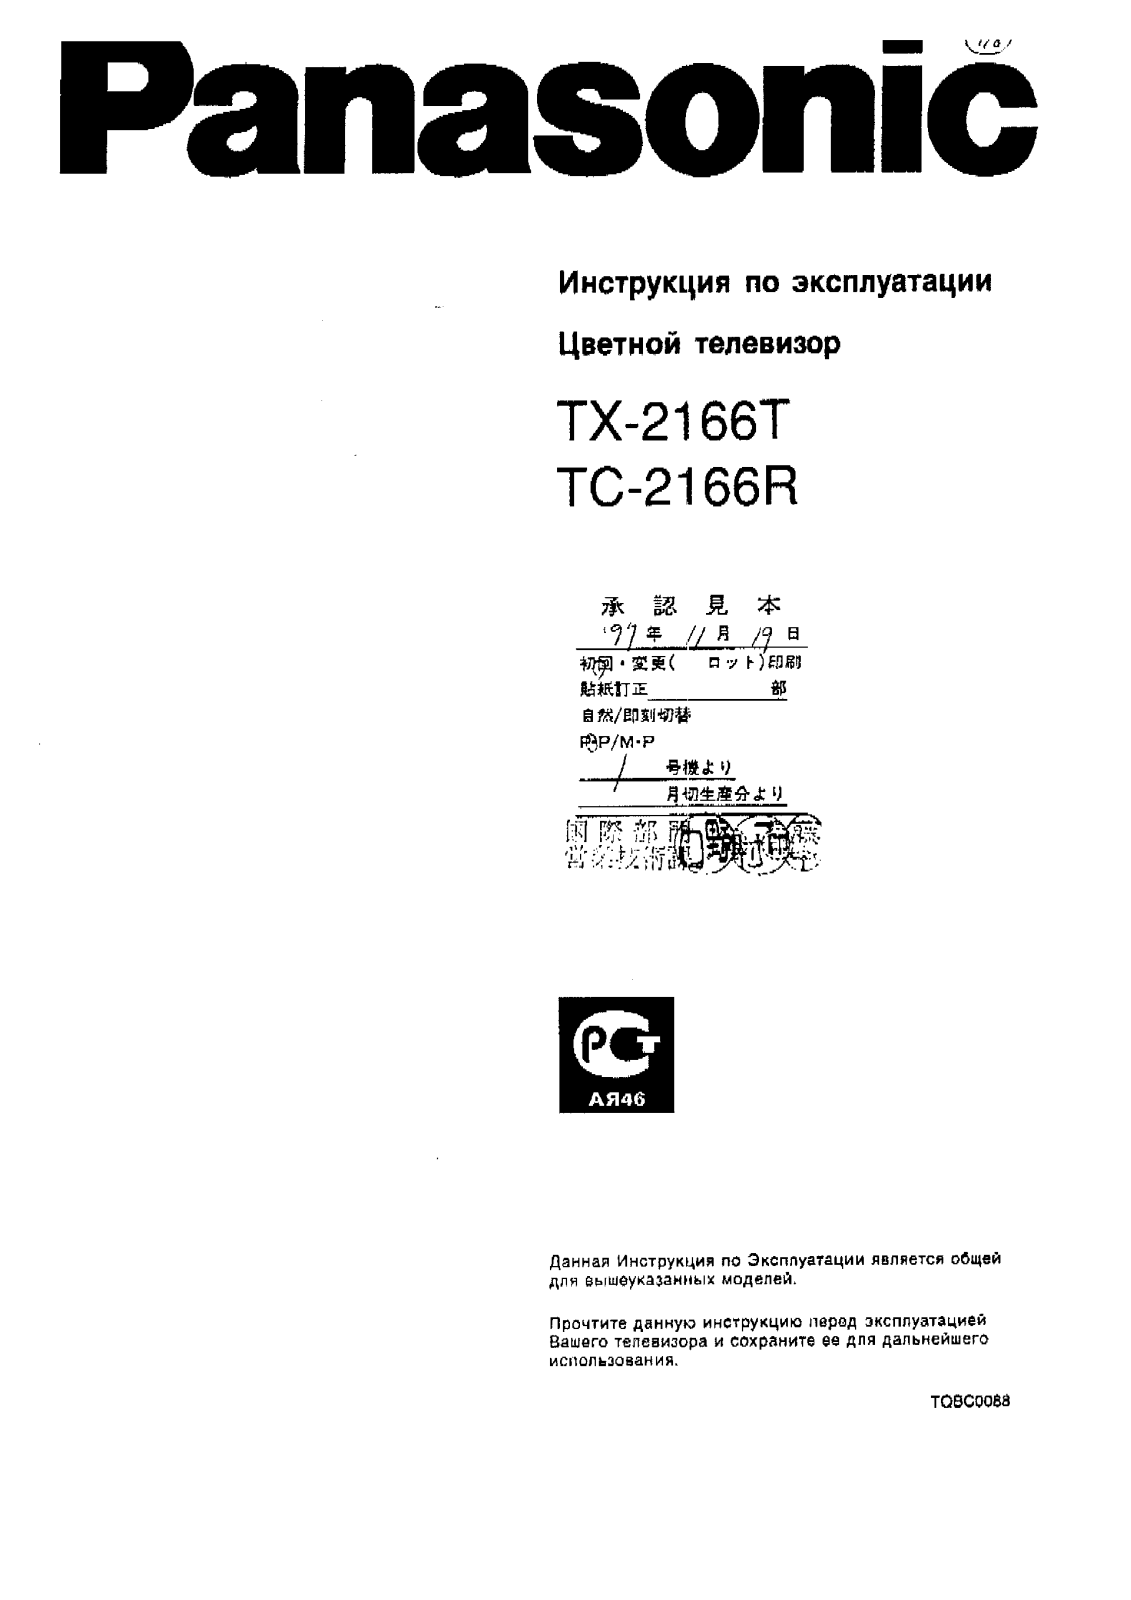 Panasonic TX-2166T User Manual